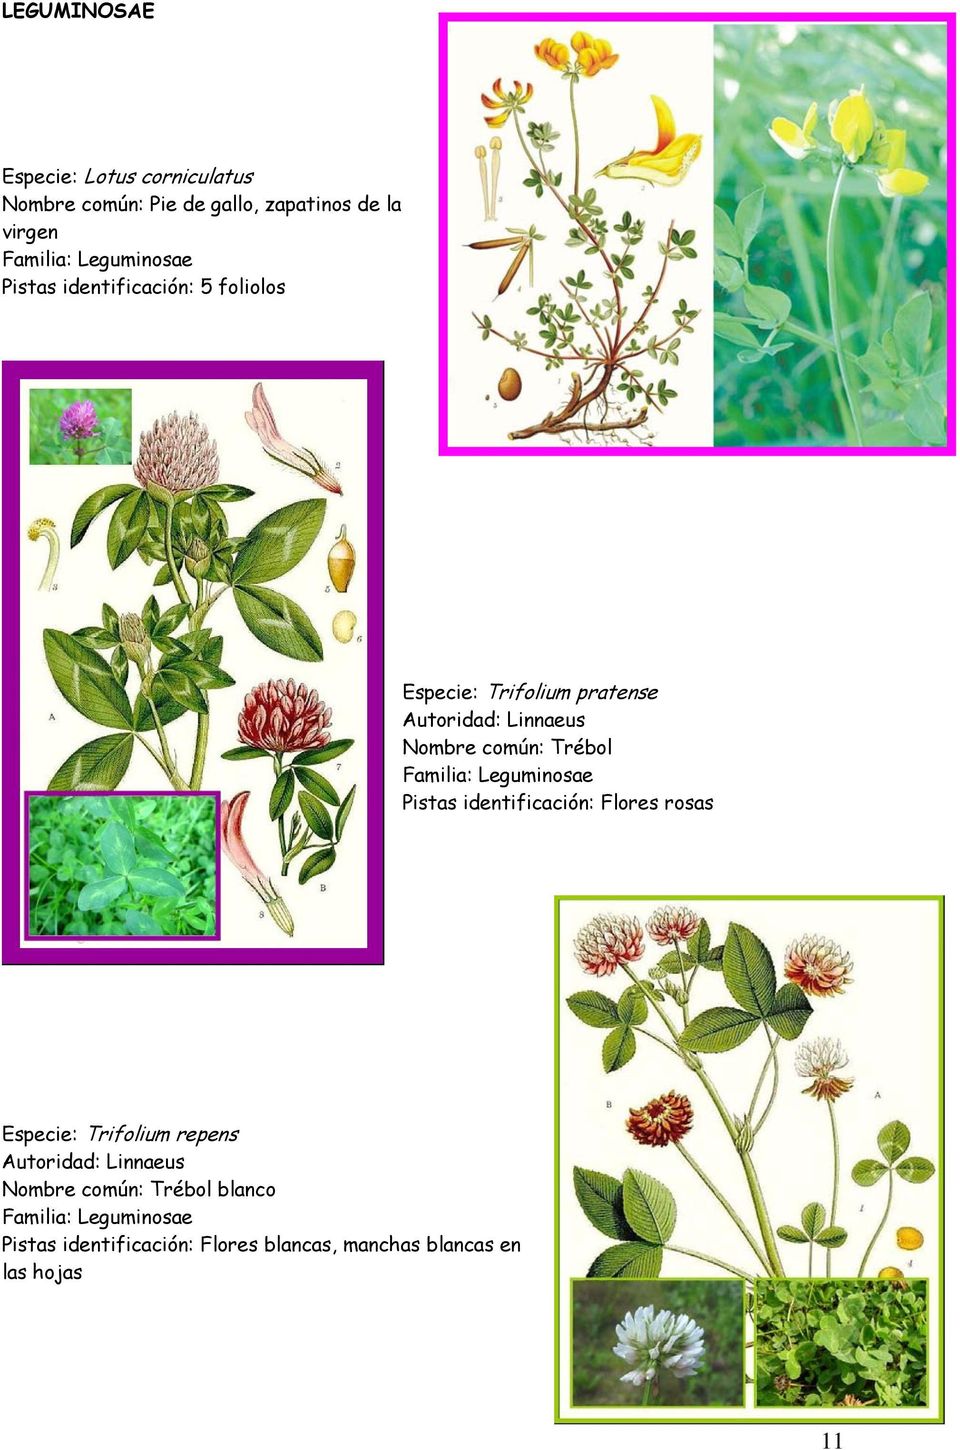 común: Trébol Familia: Leguminosae Flores rosas Especie: Trifolium repens Nombre